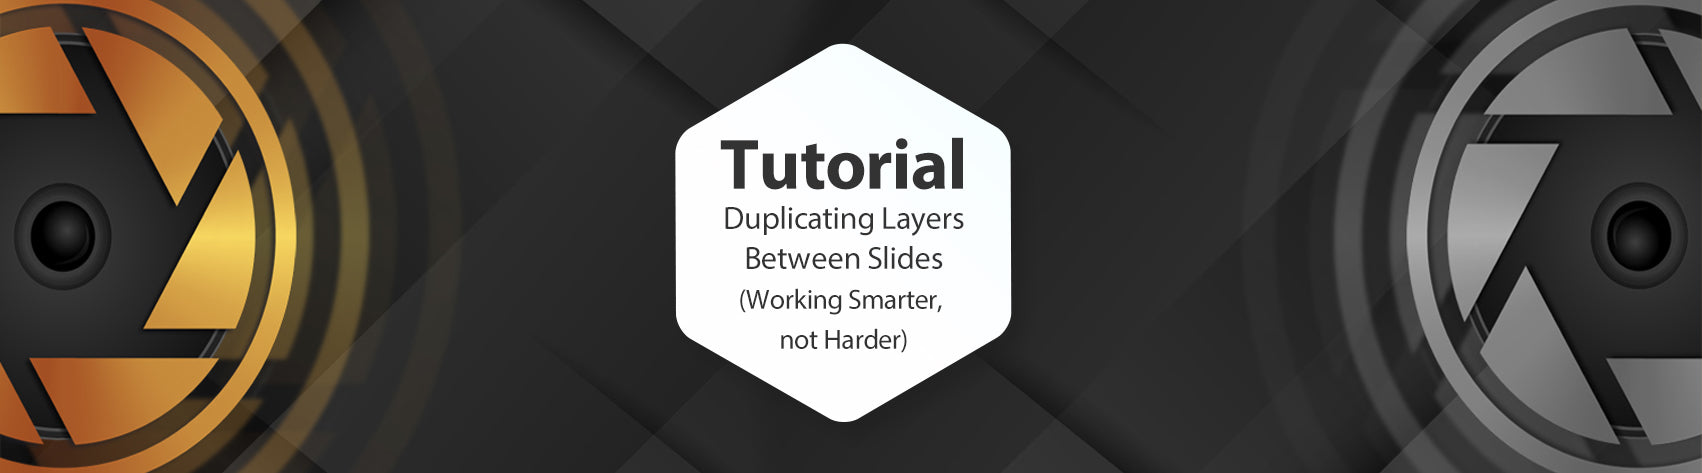 Tutorial - Duplicating Layers Between Slides (Working Smarter, not Harder)